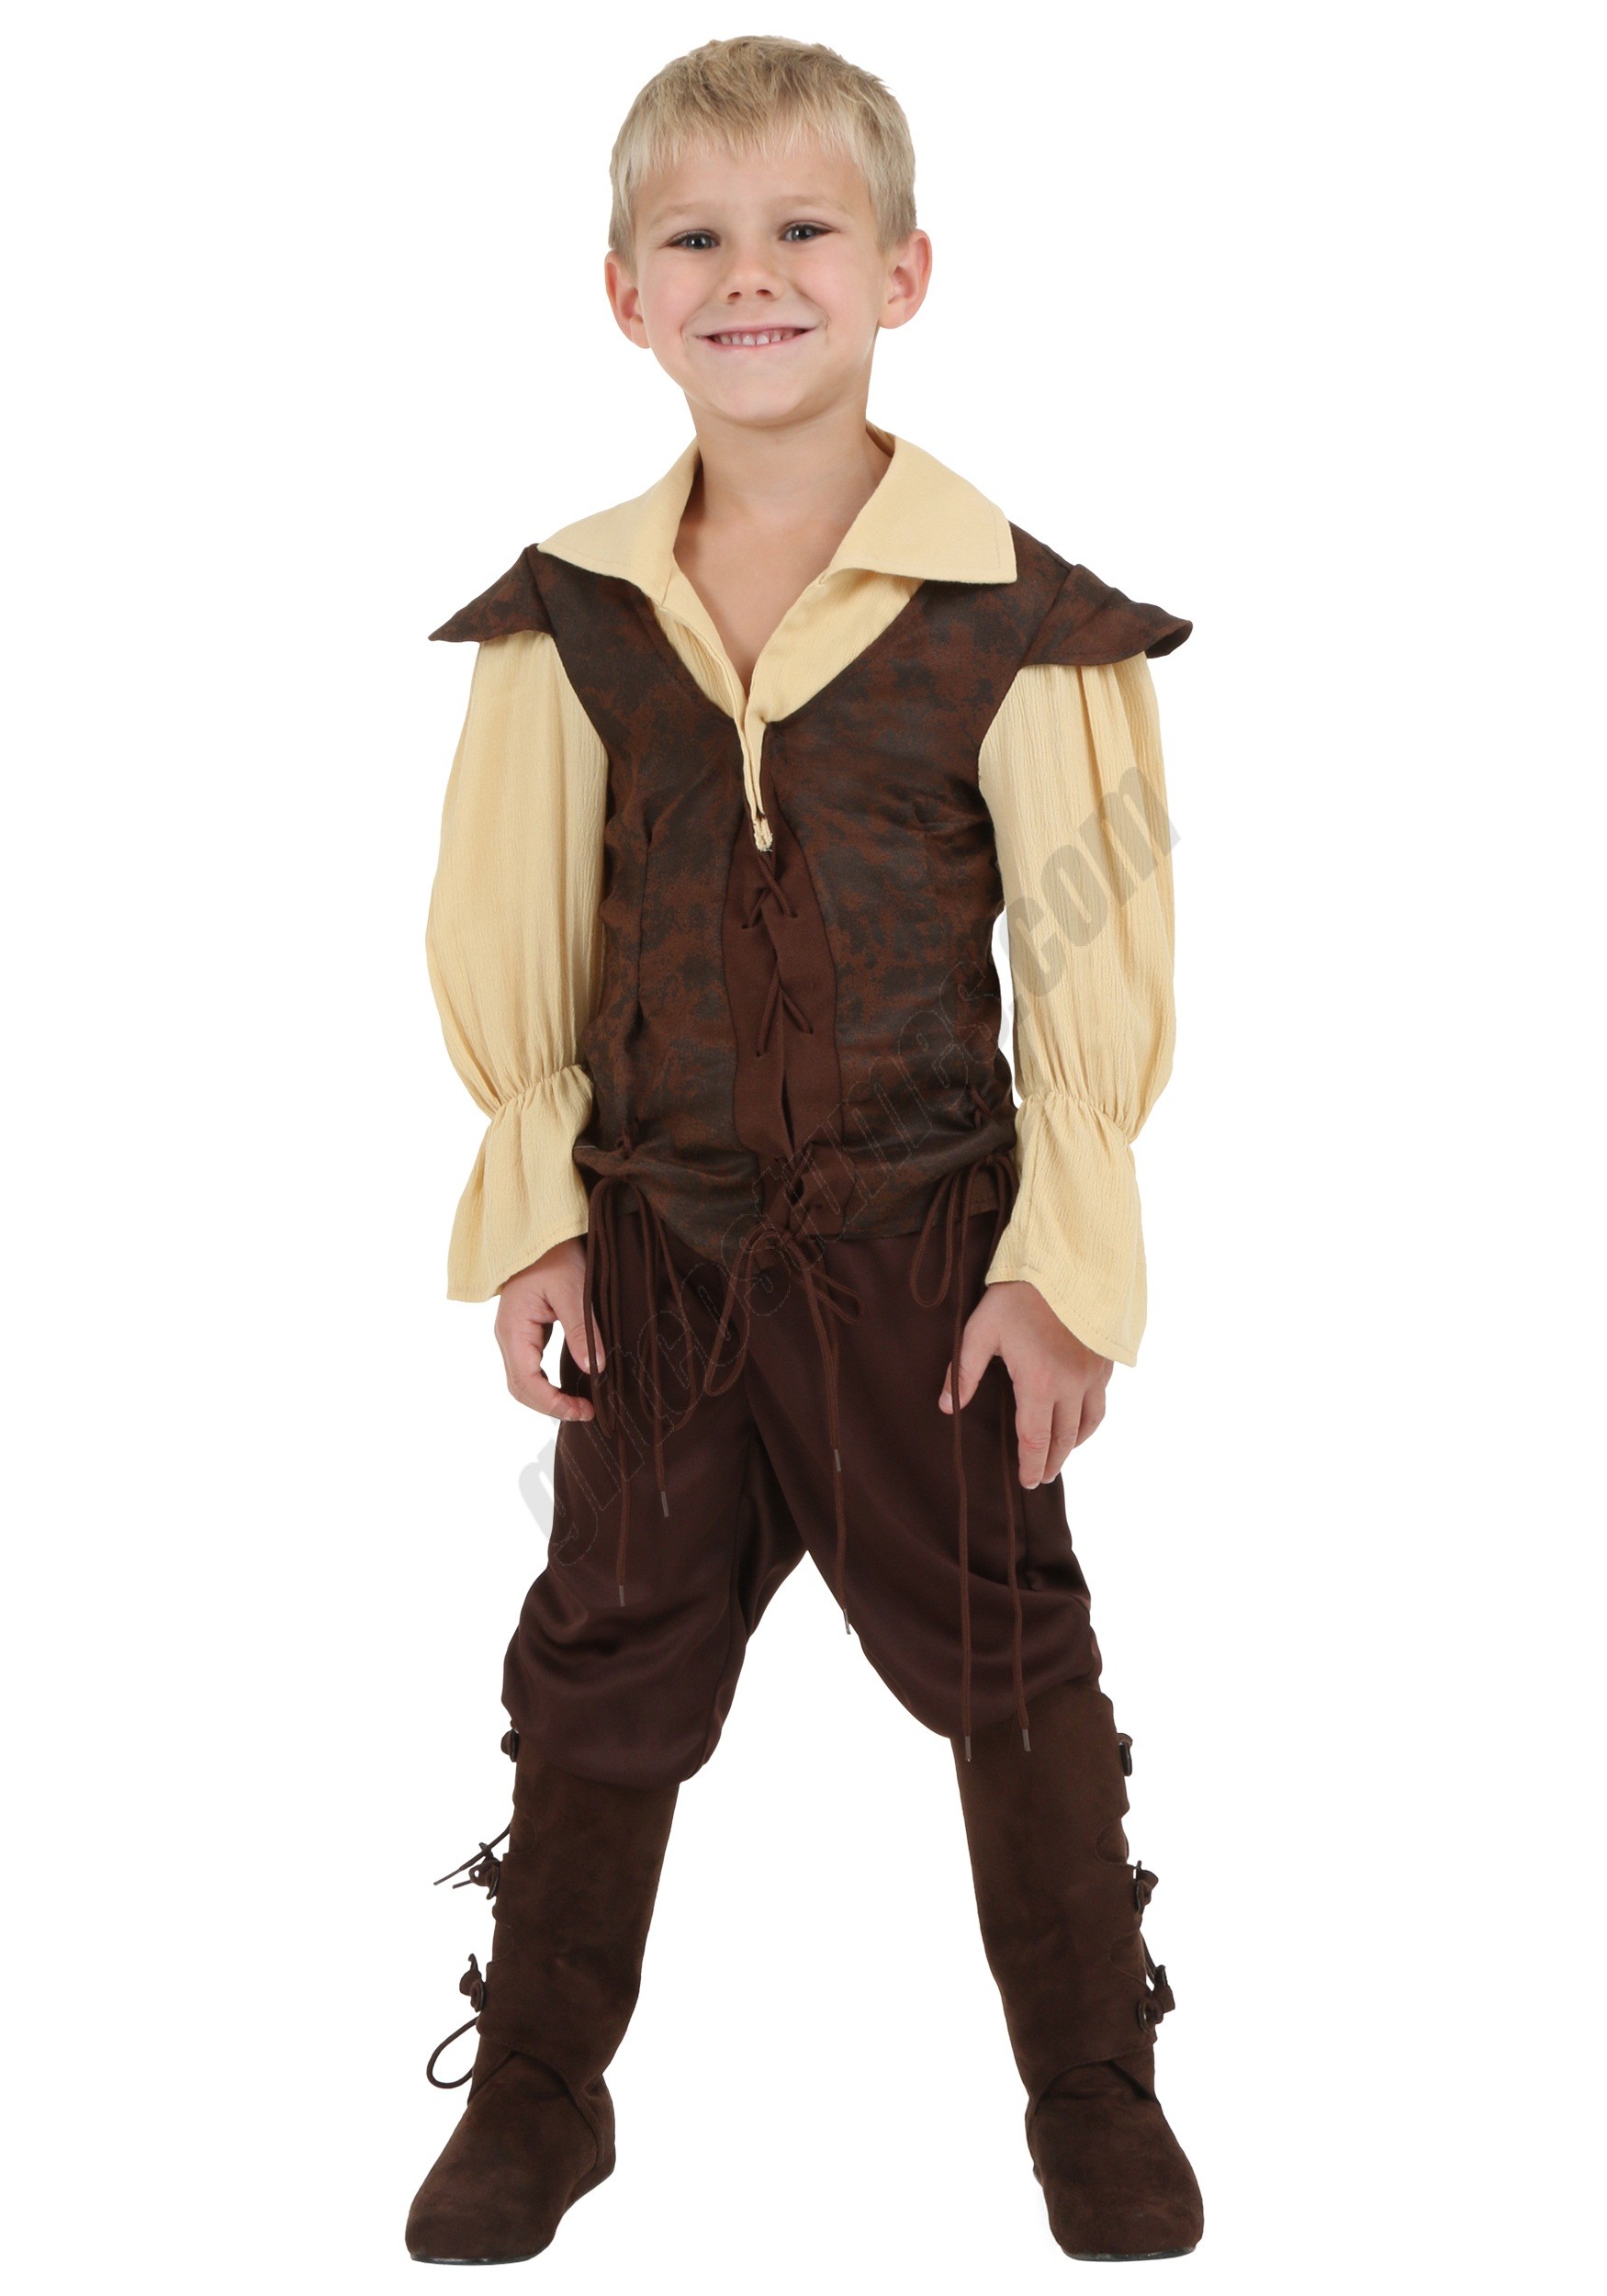 Toddler Renaissance Man Costume Promotions - Toddler Renaissance Man Costume Promotions